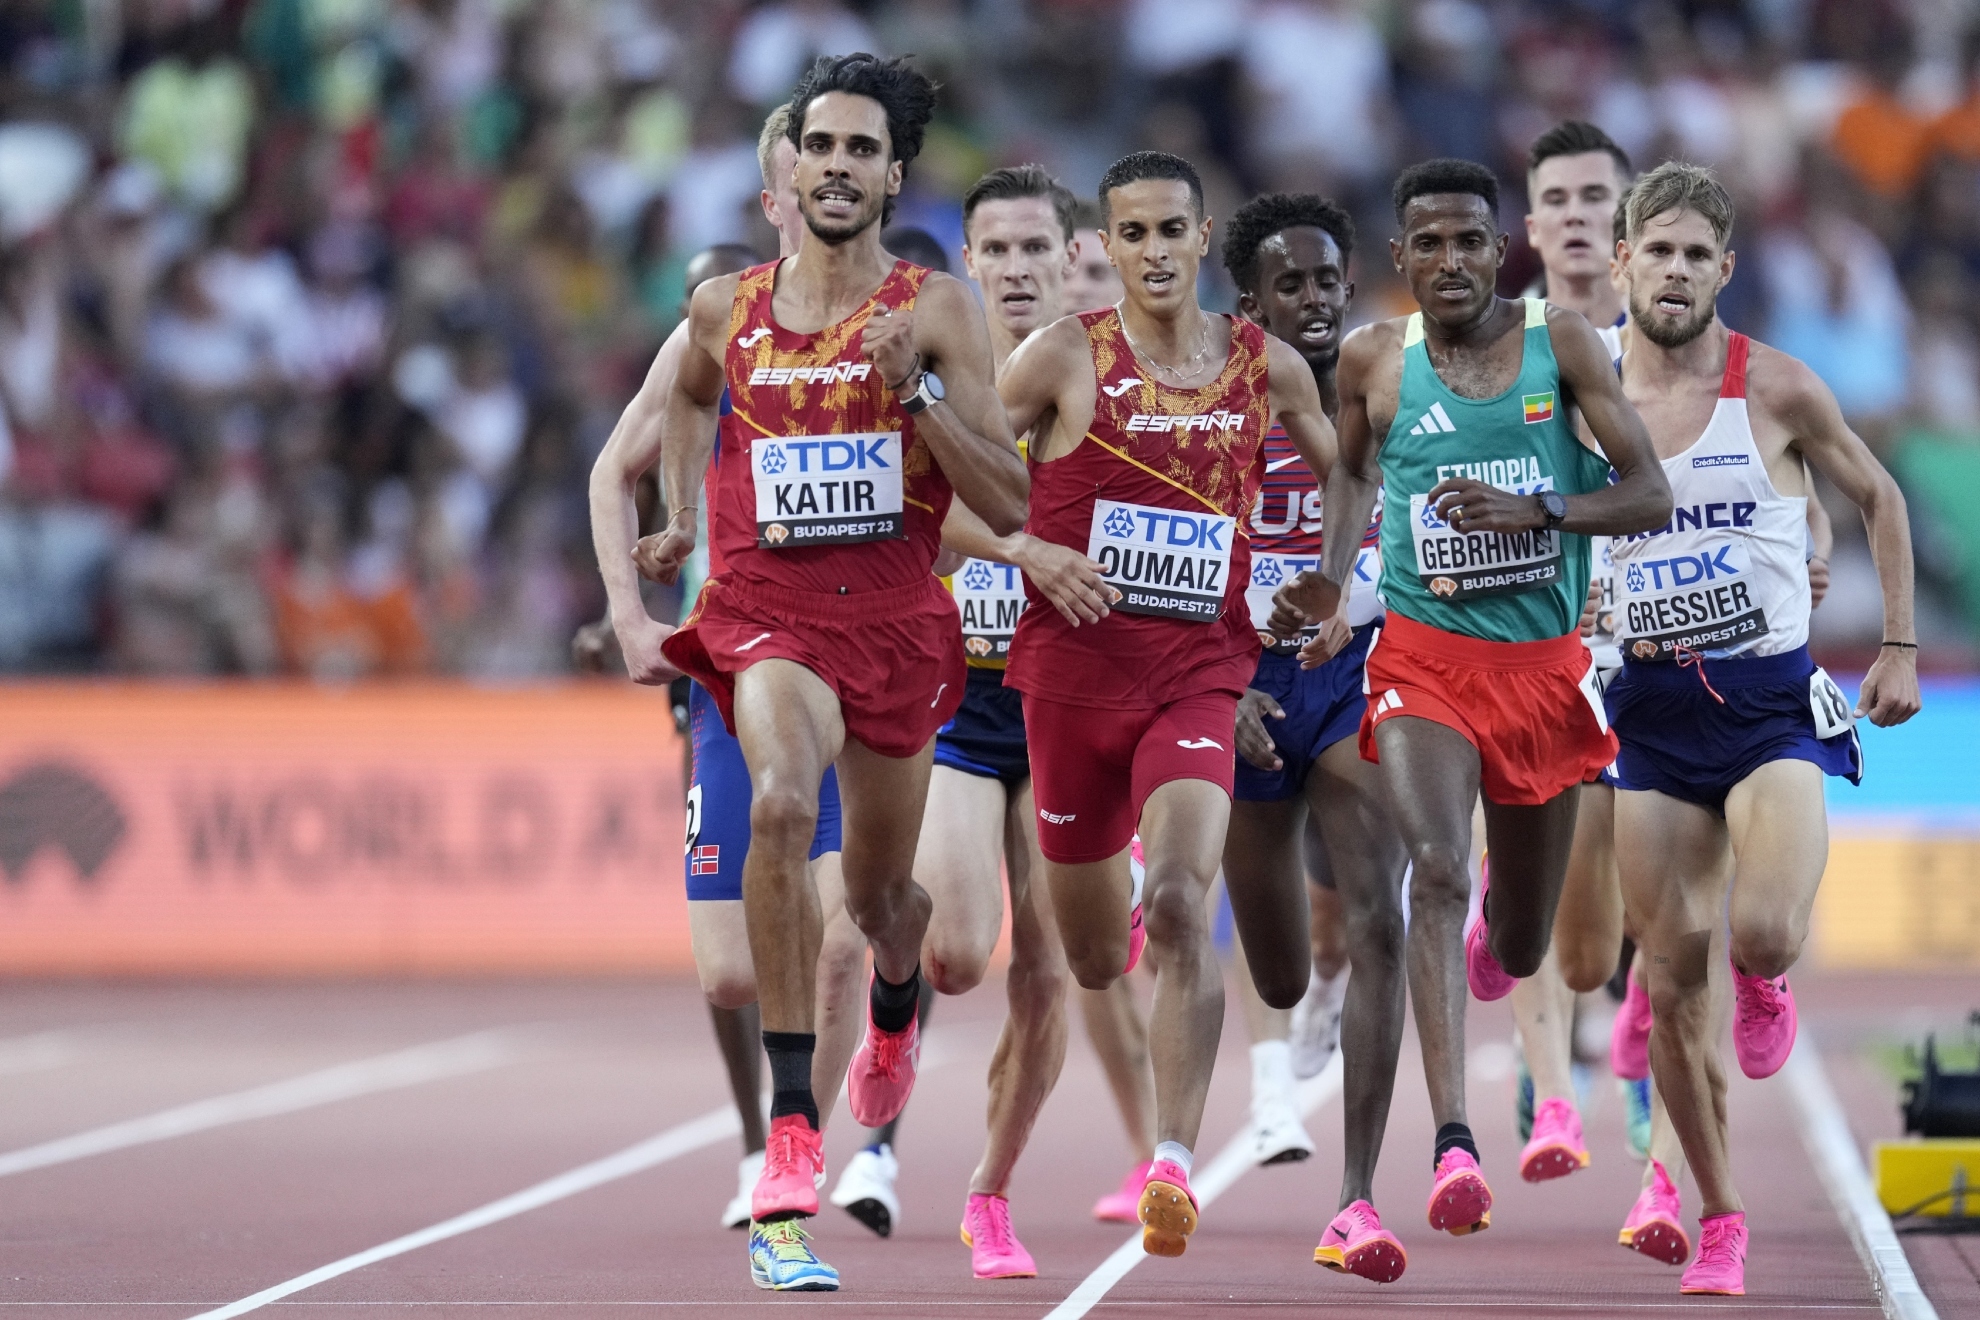 Mundial de Atletismo, 27 de agosto en directo | Final de 5.000 metros con dos españoles, en vivo